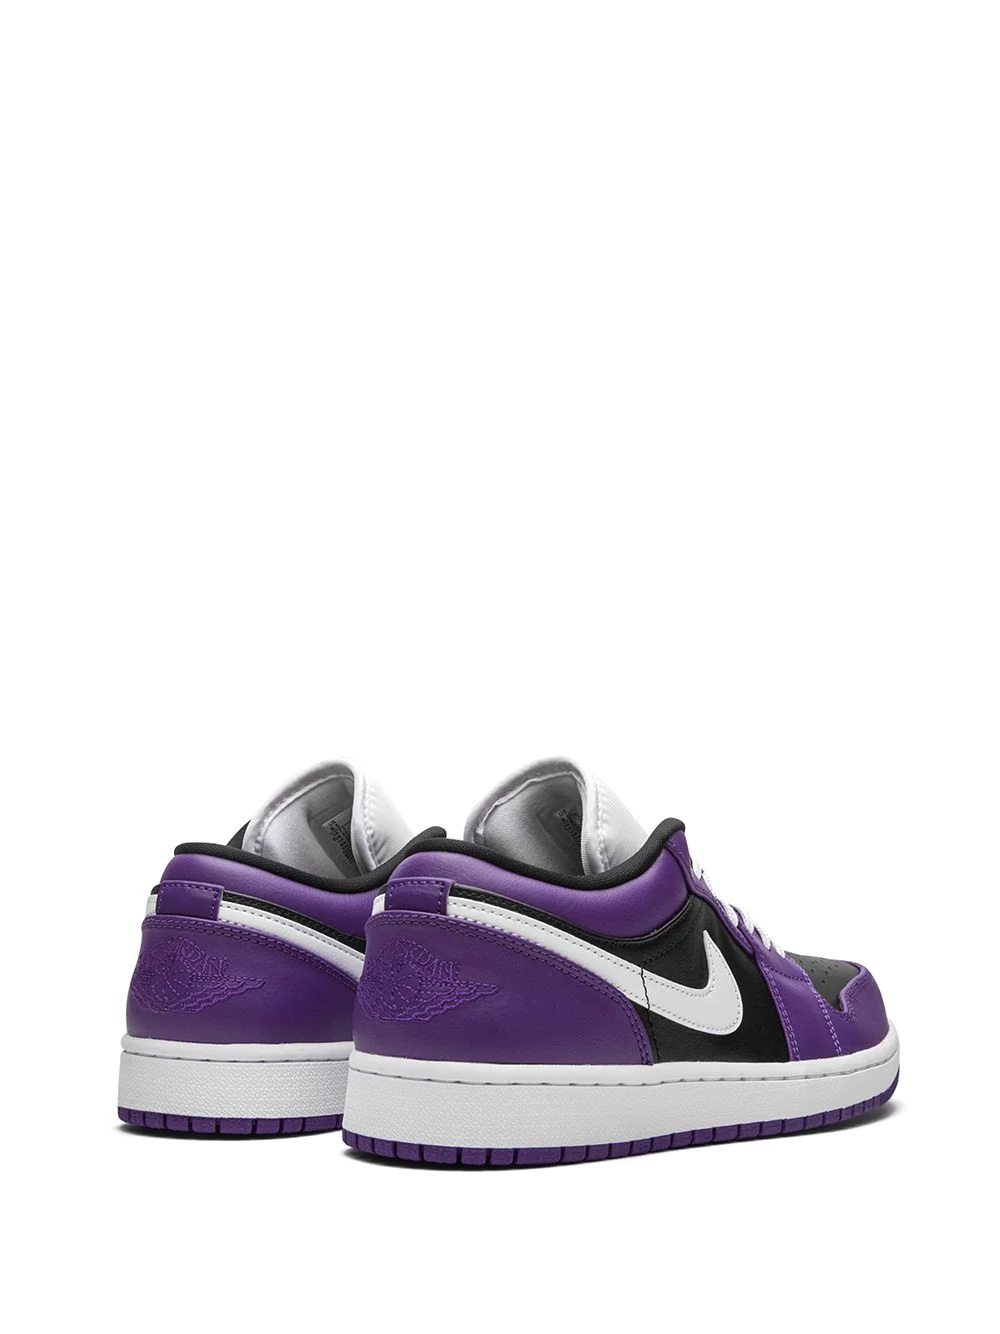 Air Jordan 1 Low "Court Purple" sneakers - 3